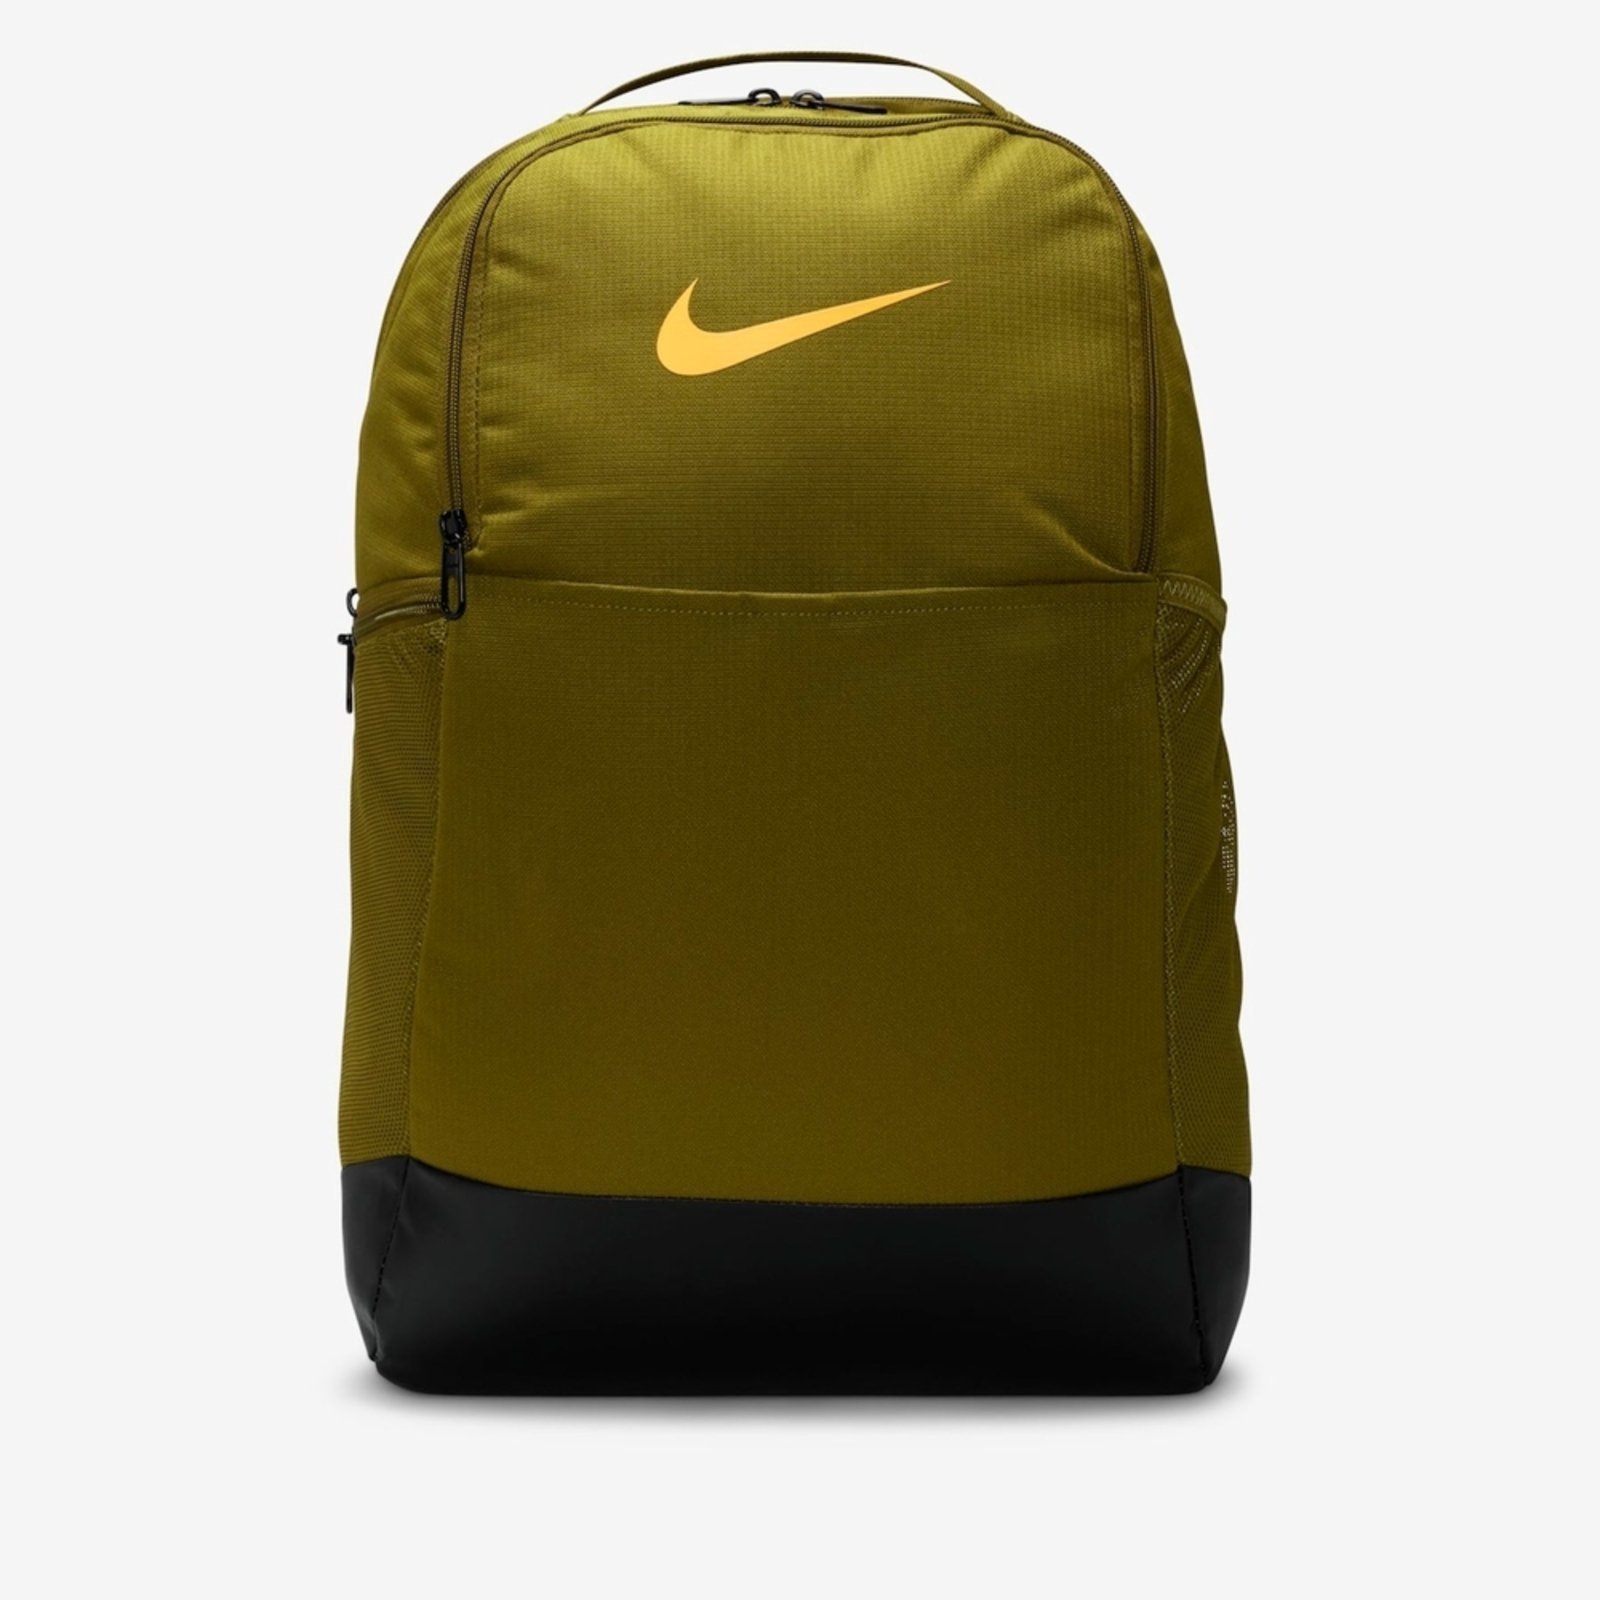 Mochila Nike Brasilia Unissex - Compre Agora